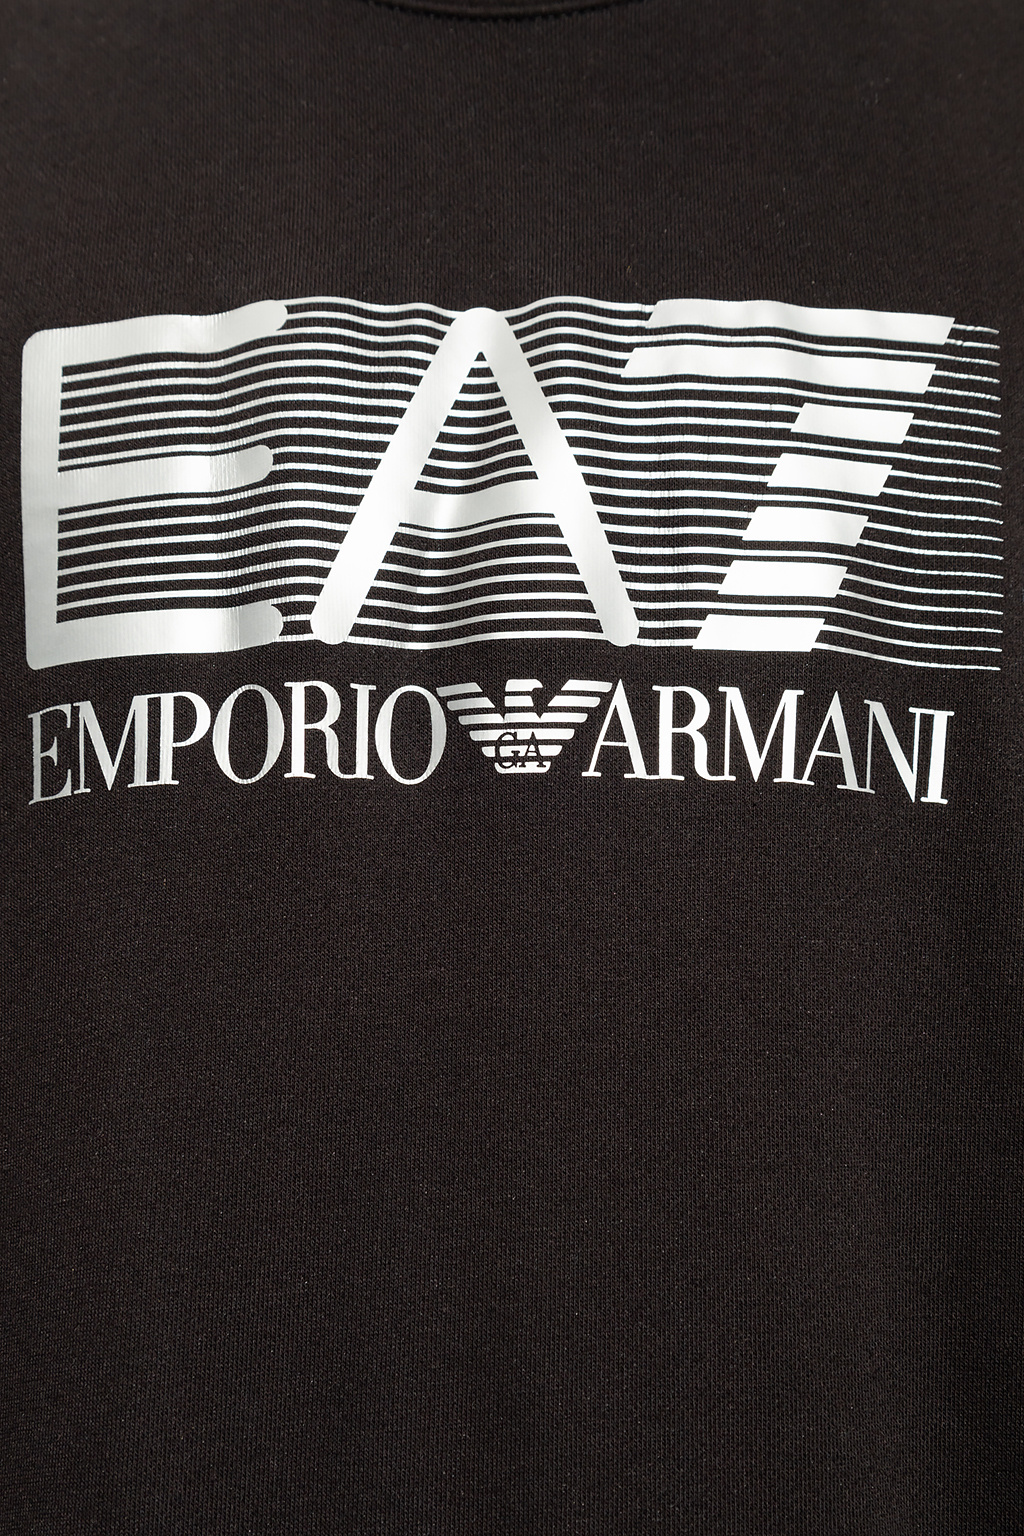 EA7 Emporio Armani Giorgio Armani Drop Crotch Pants for Men